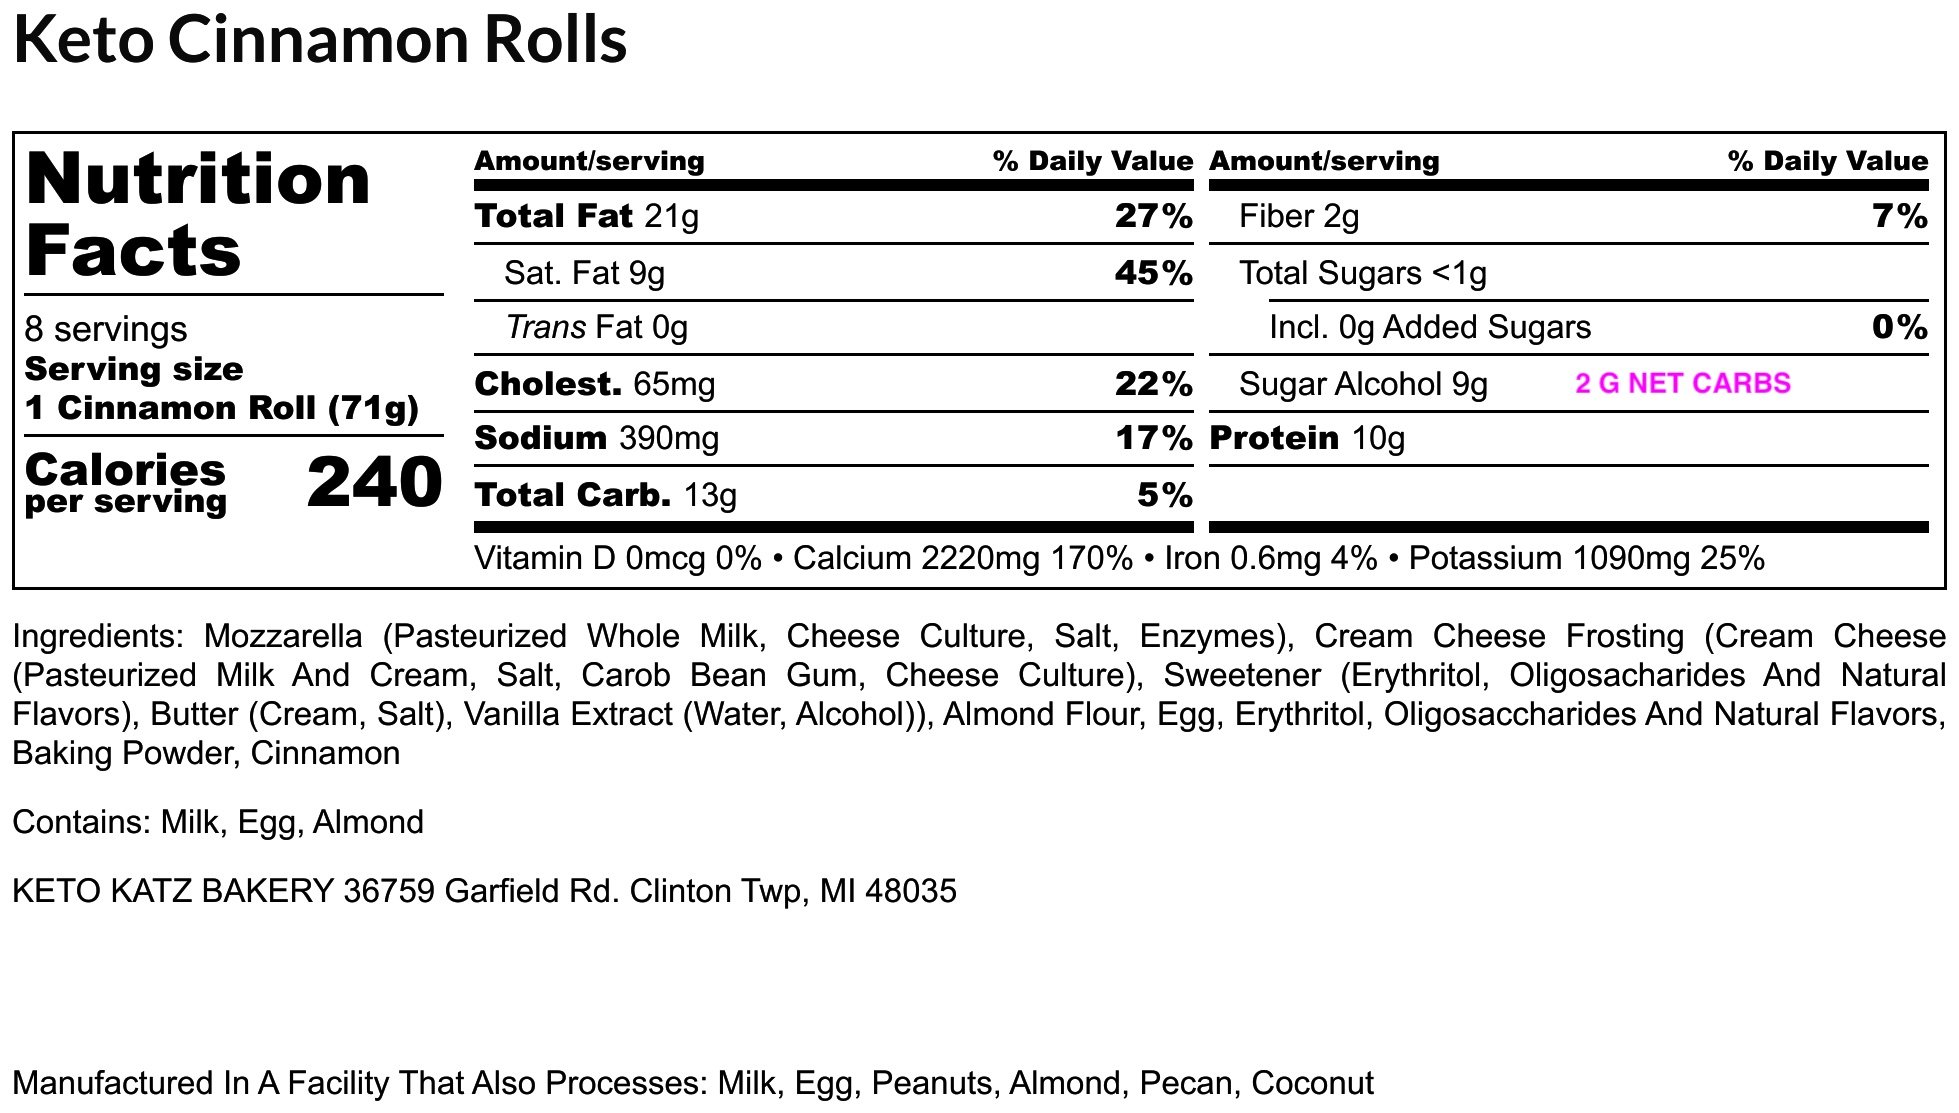 Keto Cinnamon Rolls - Nutrition Label (1) copy 2.jpg